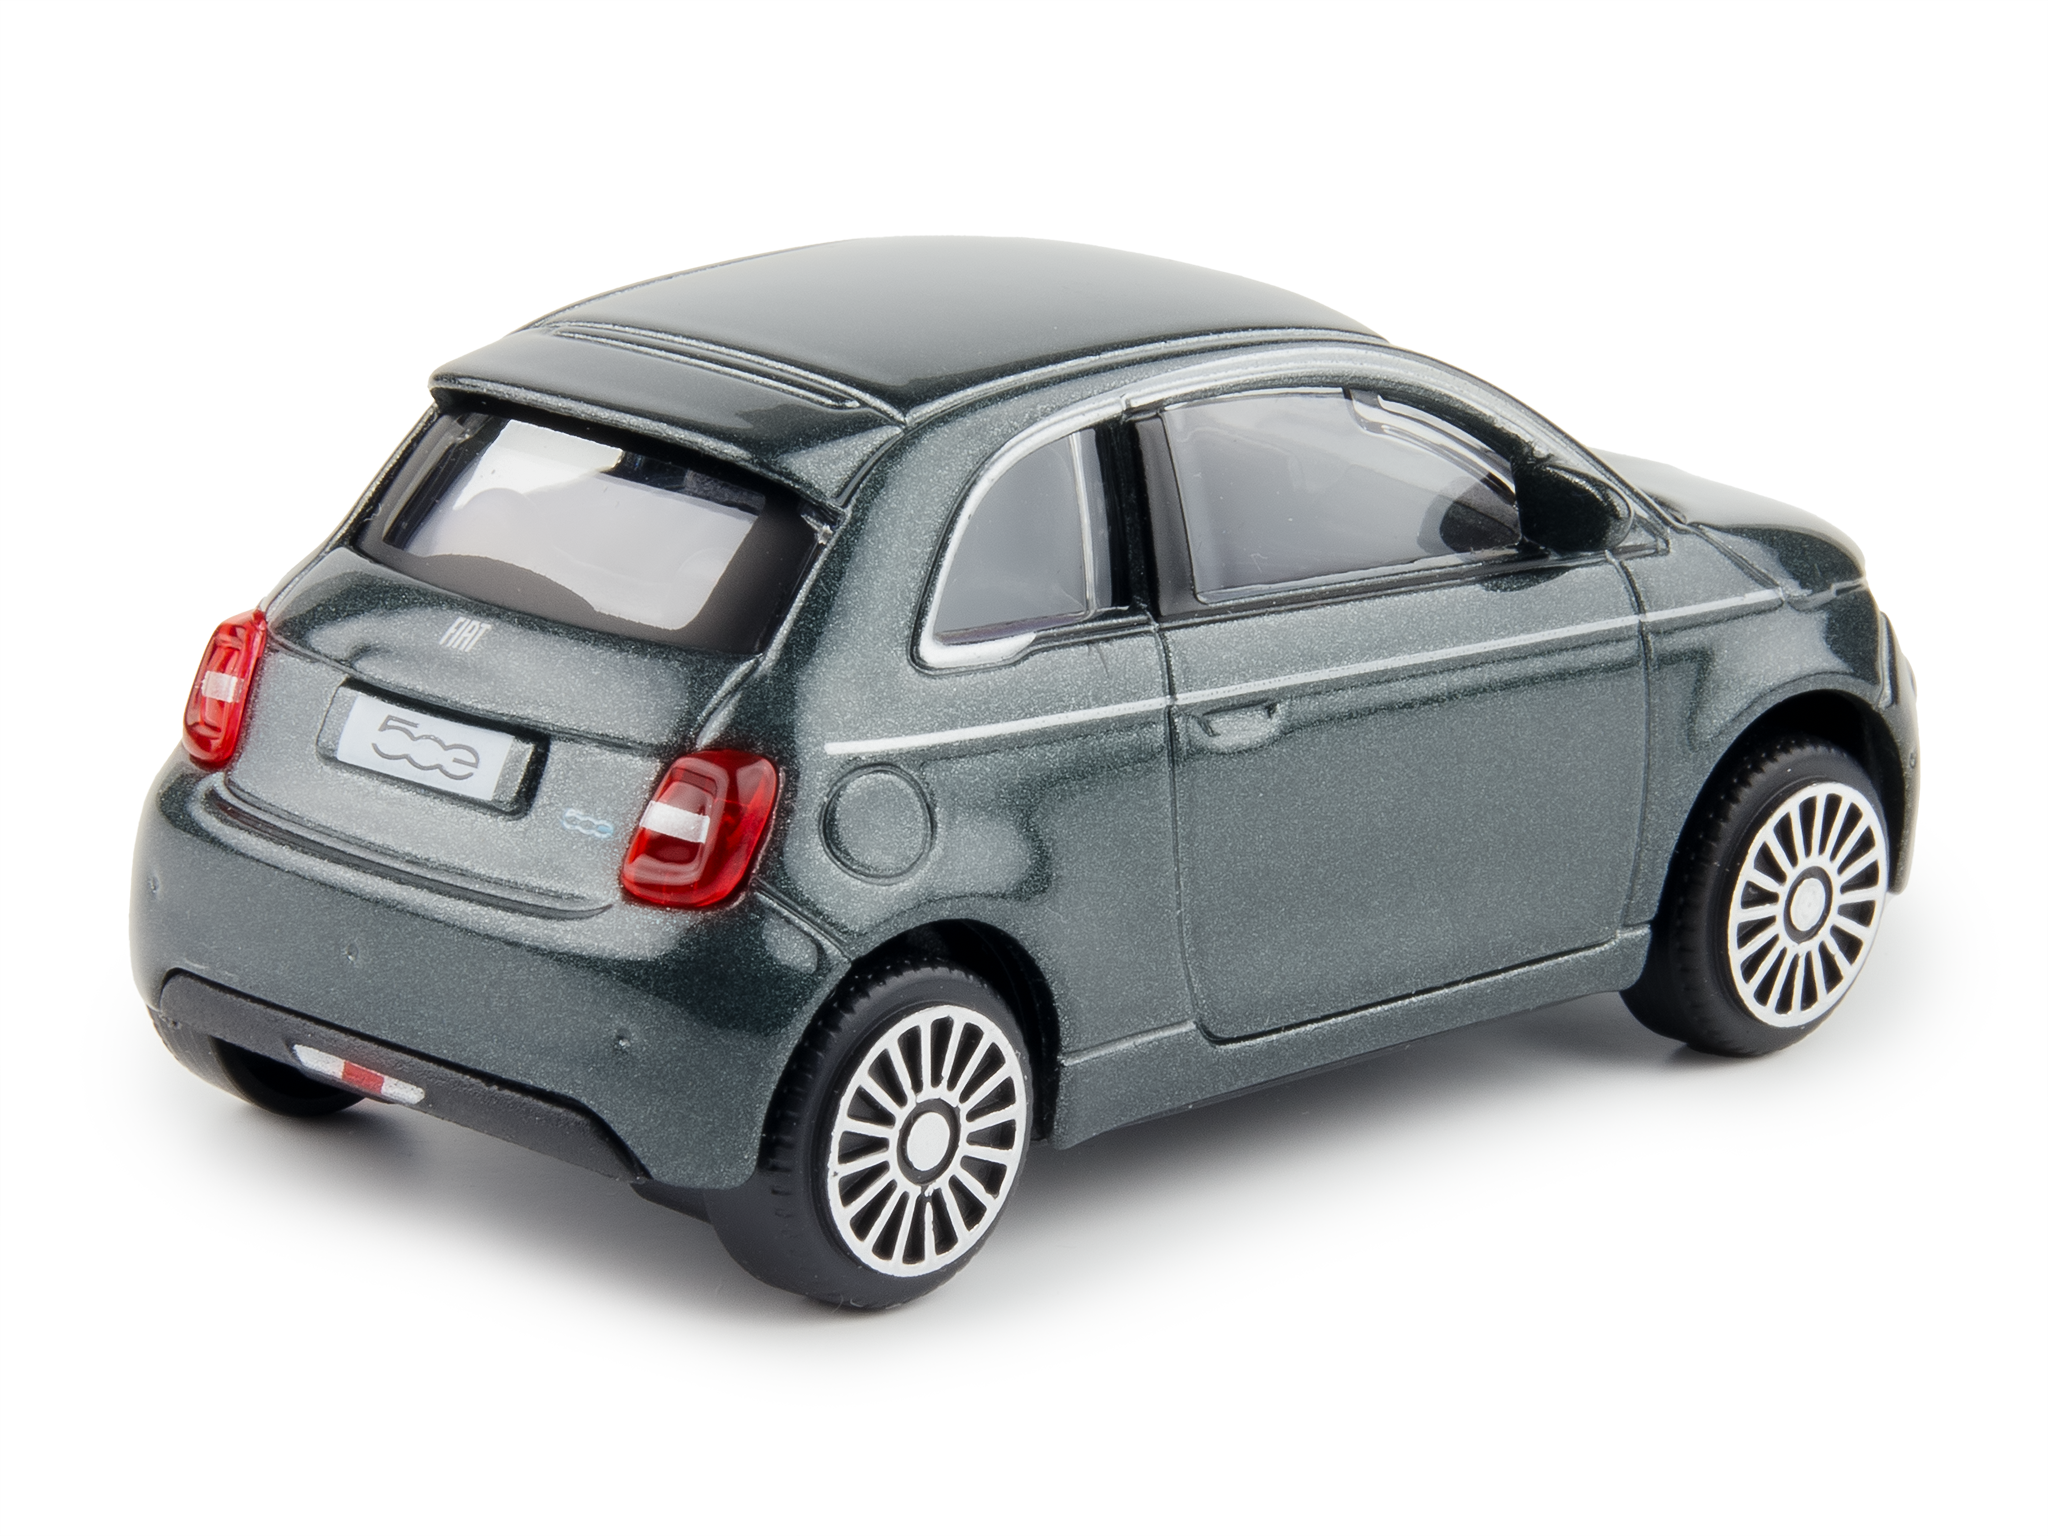 Fiat 500 La Prima dark grey metallic - 1:43 Scale Diecast Toy Car